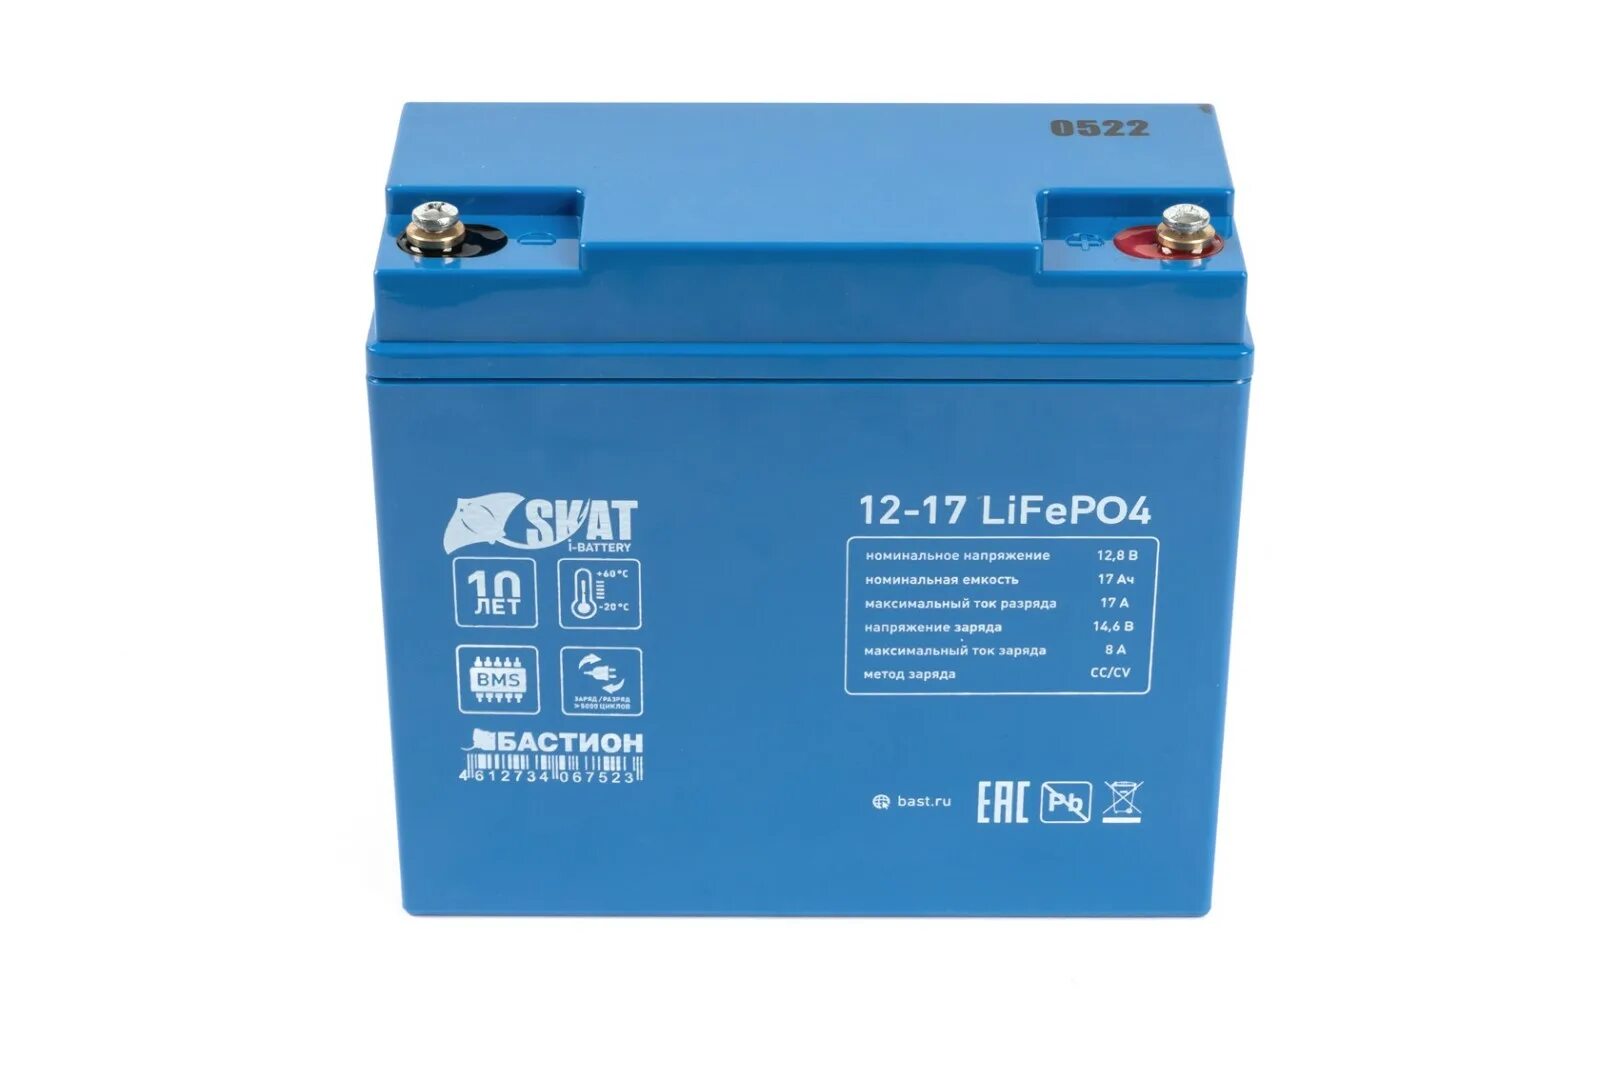 Skat i-Battery 12-17 lifepo4. АКБ Skat i-Battery 12-7 lifepo4. Skat i-Battery 12-17 lifepo4 габариты. Аккумуляторная батарея "12-сам-23". Skat i battery